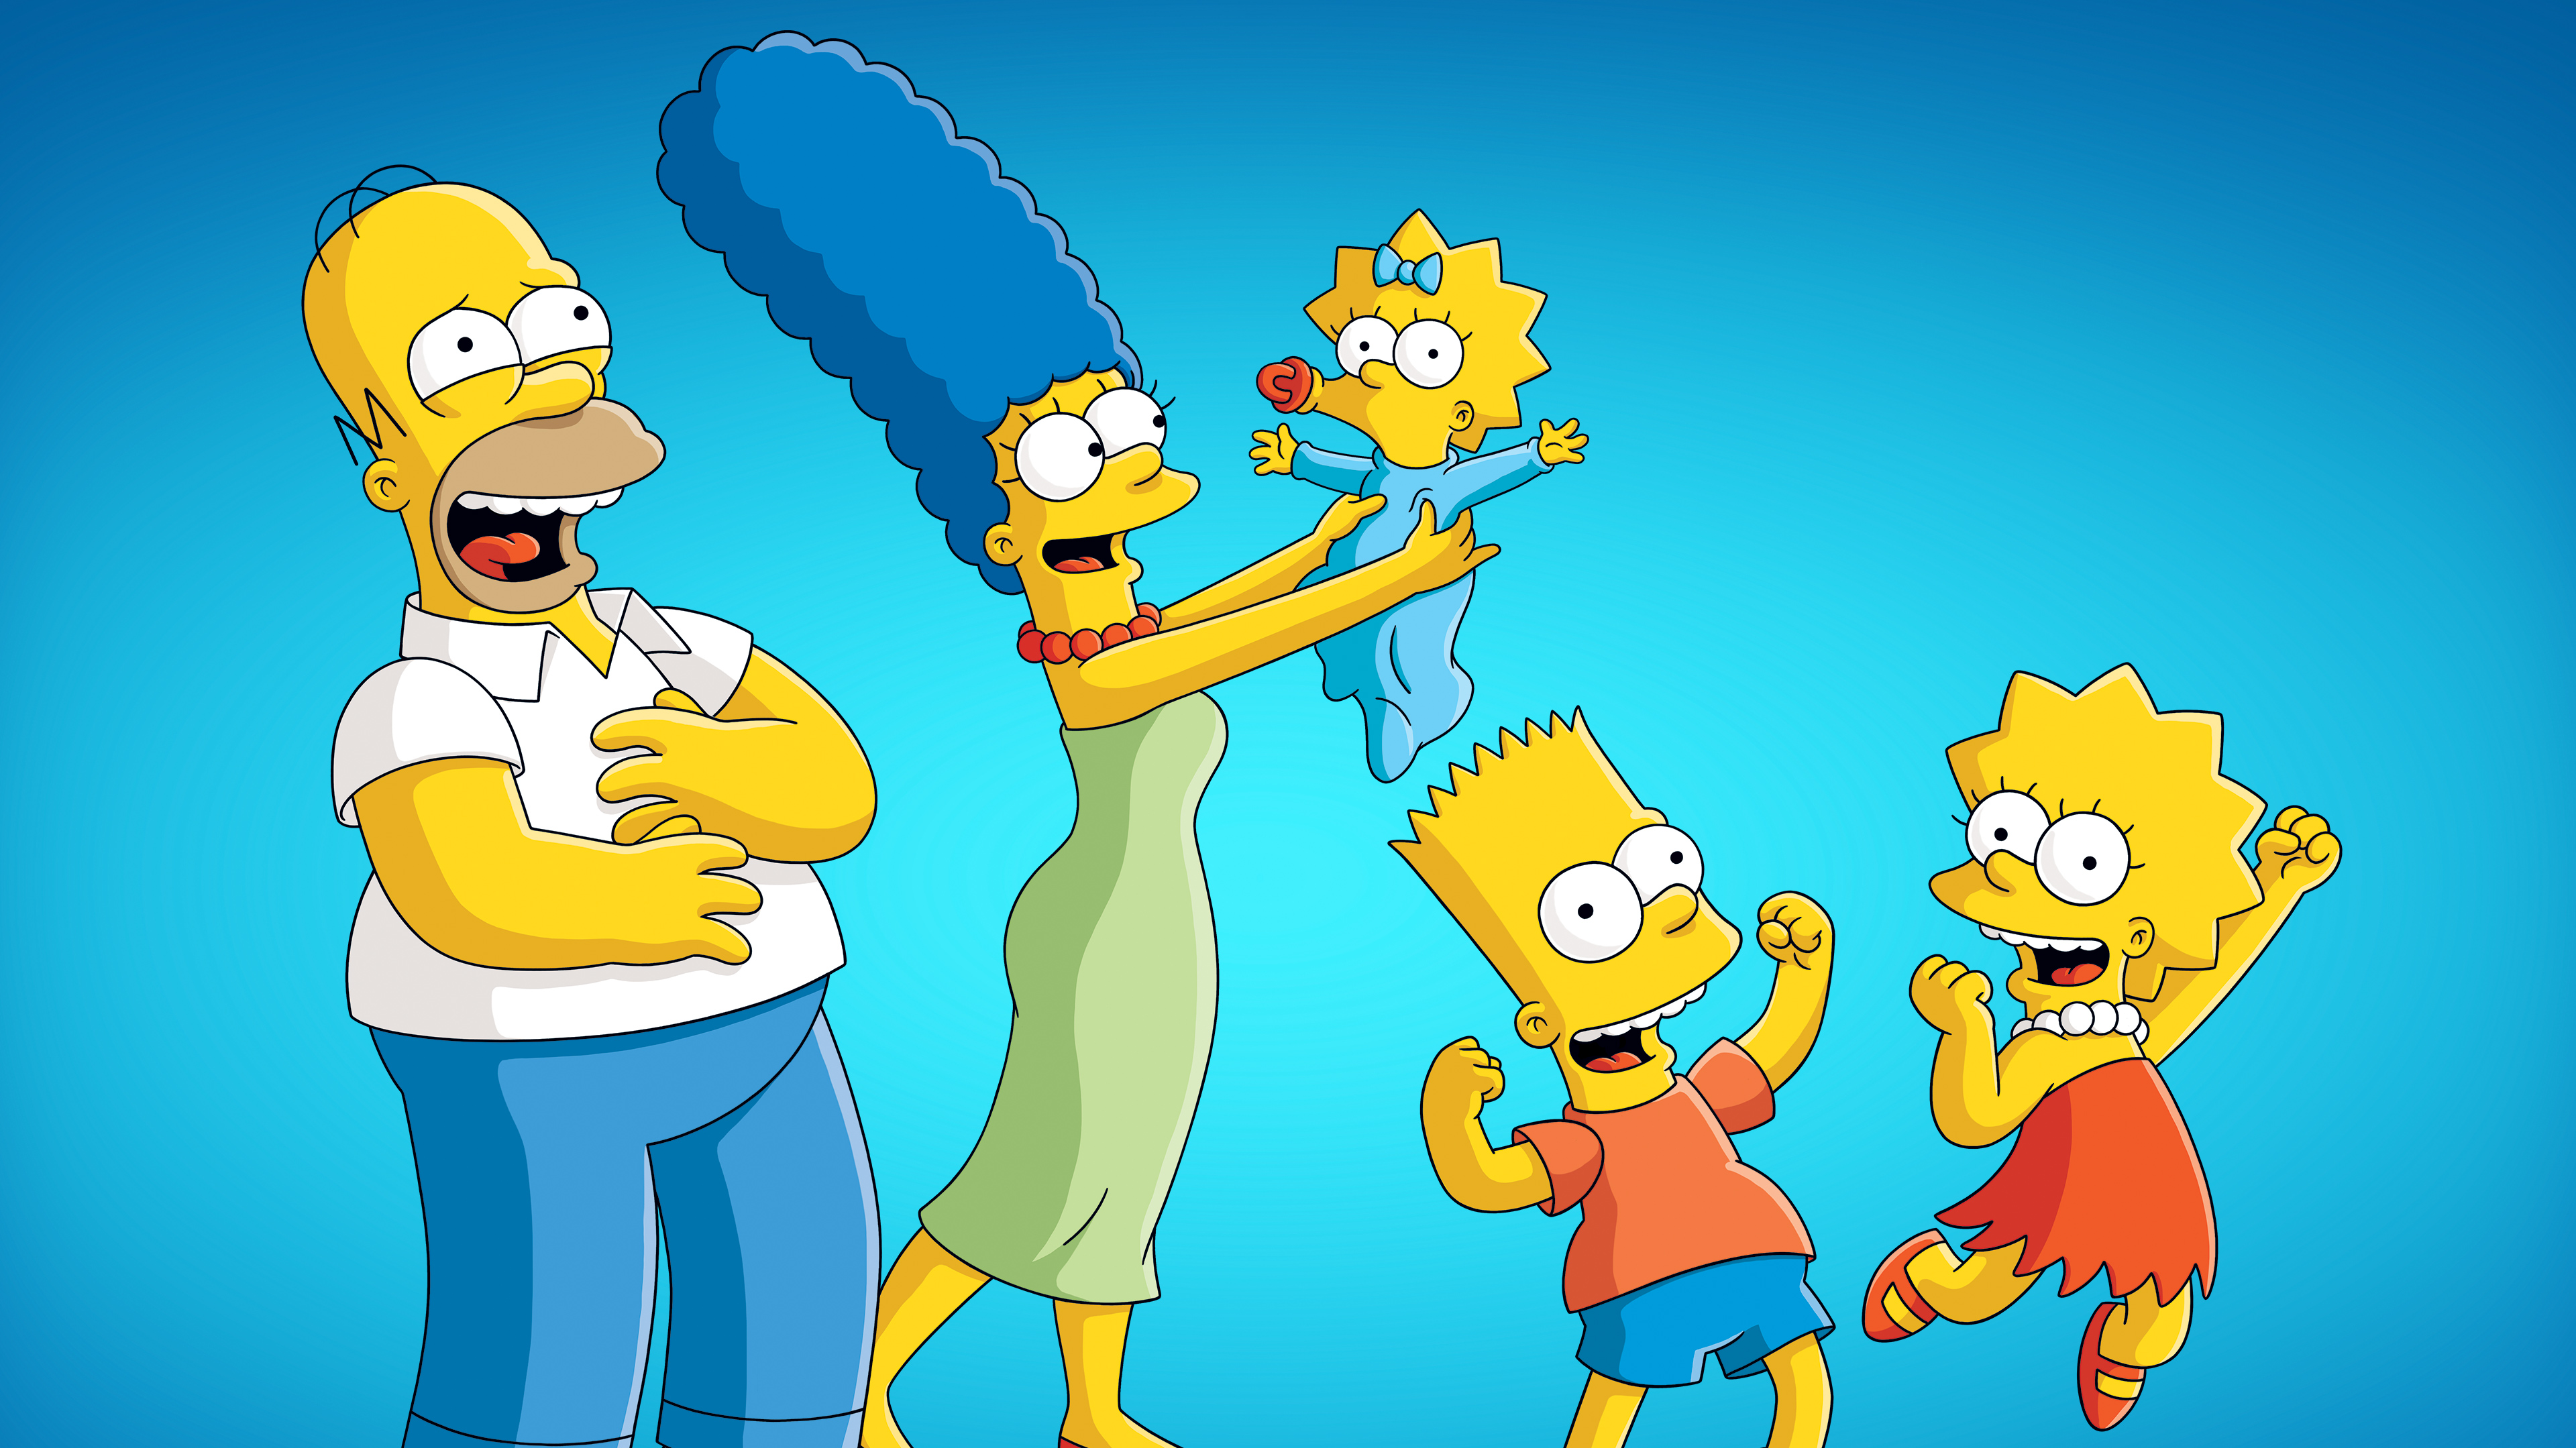 The Simpsons: Seasons 31 and 32; FOX Animated Series Renewed ...